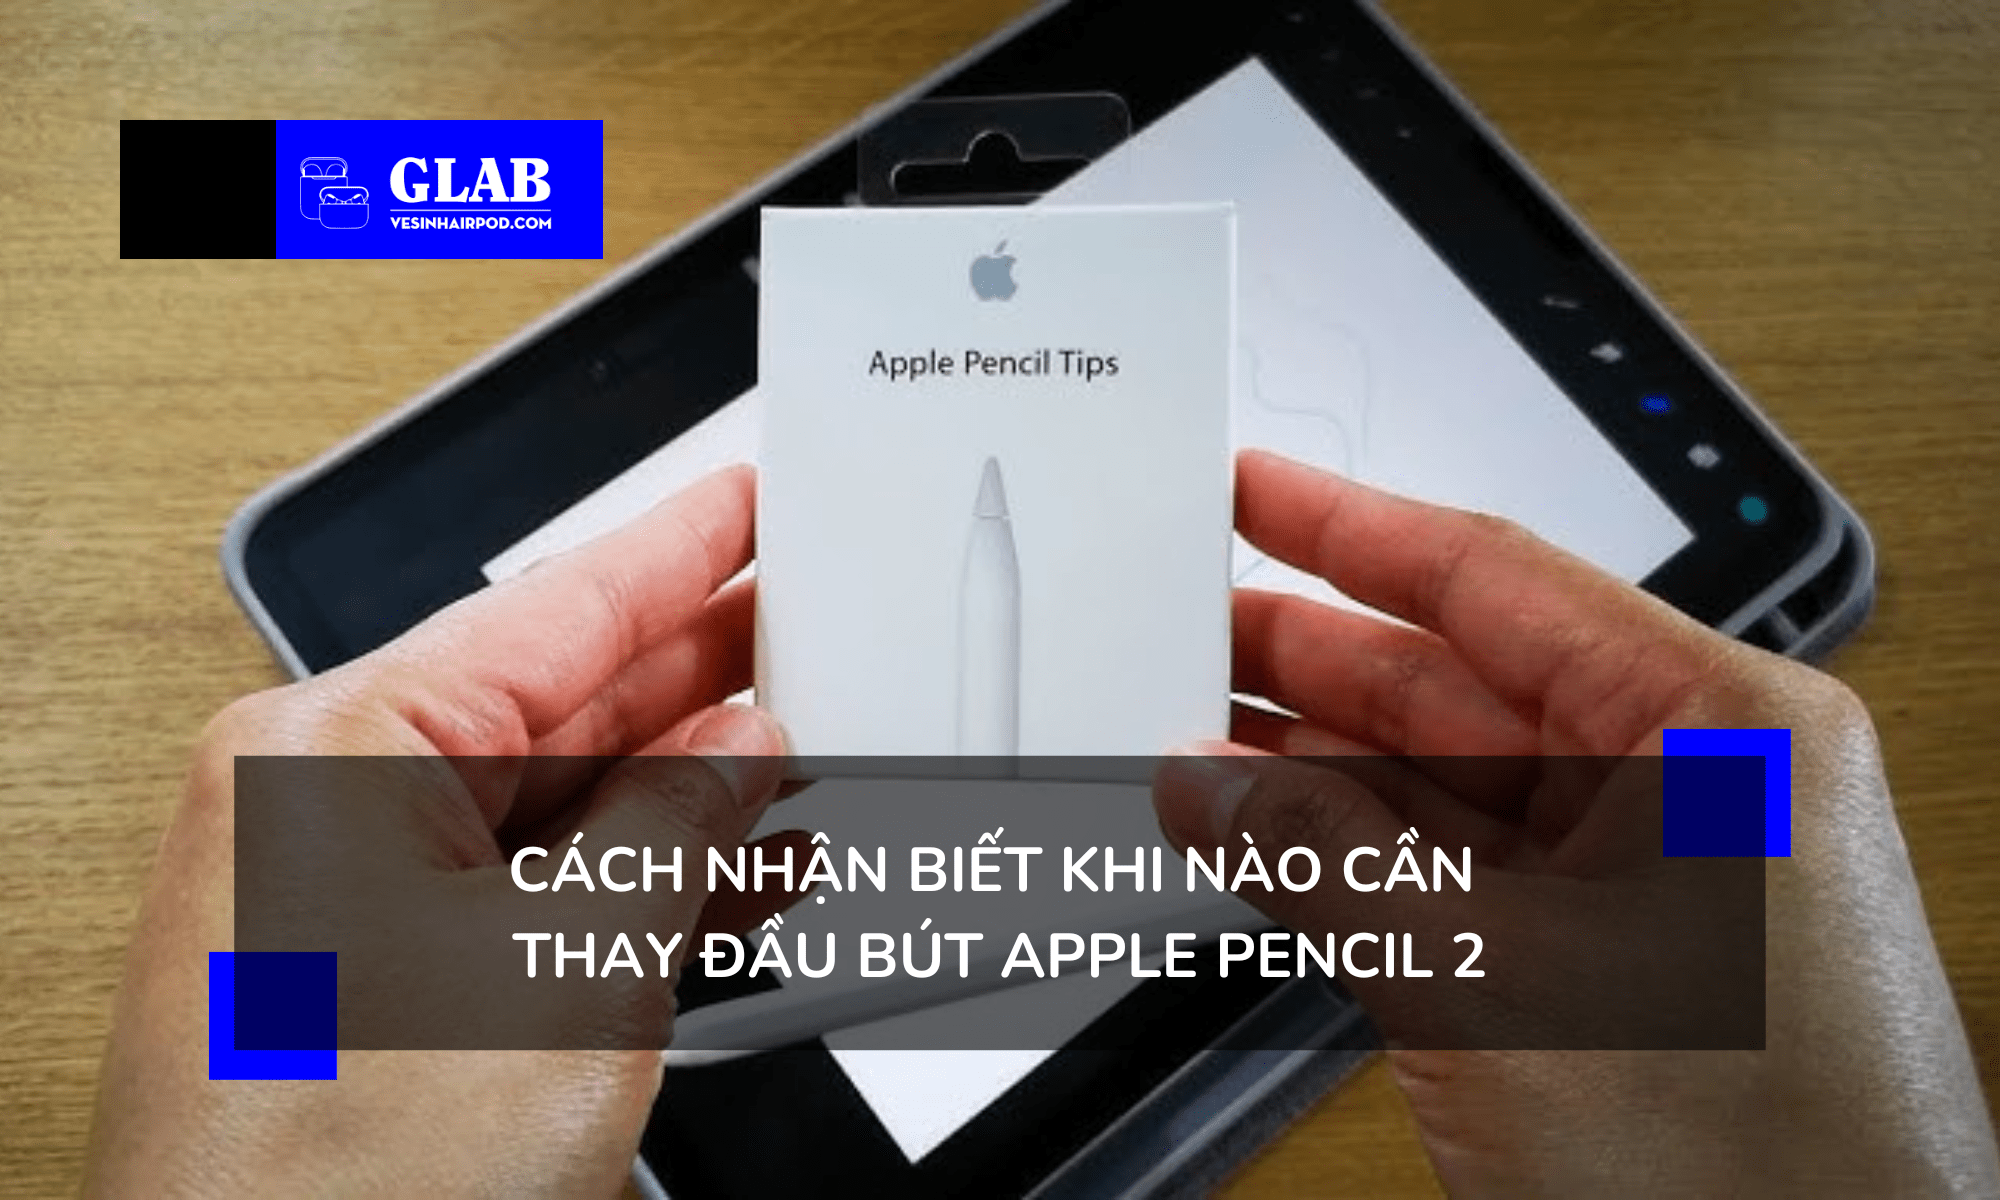 thay-dau-but-apple-pencil-2